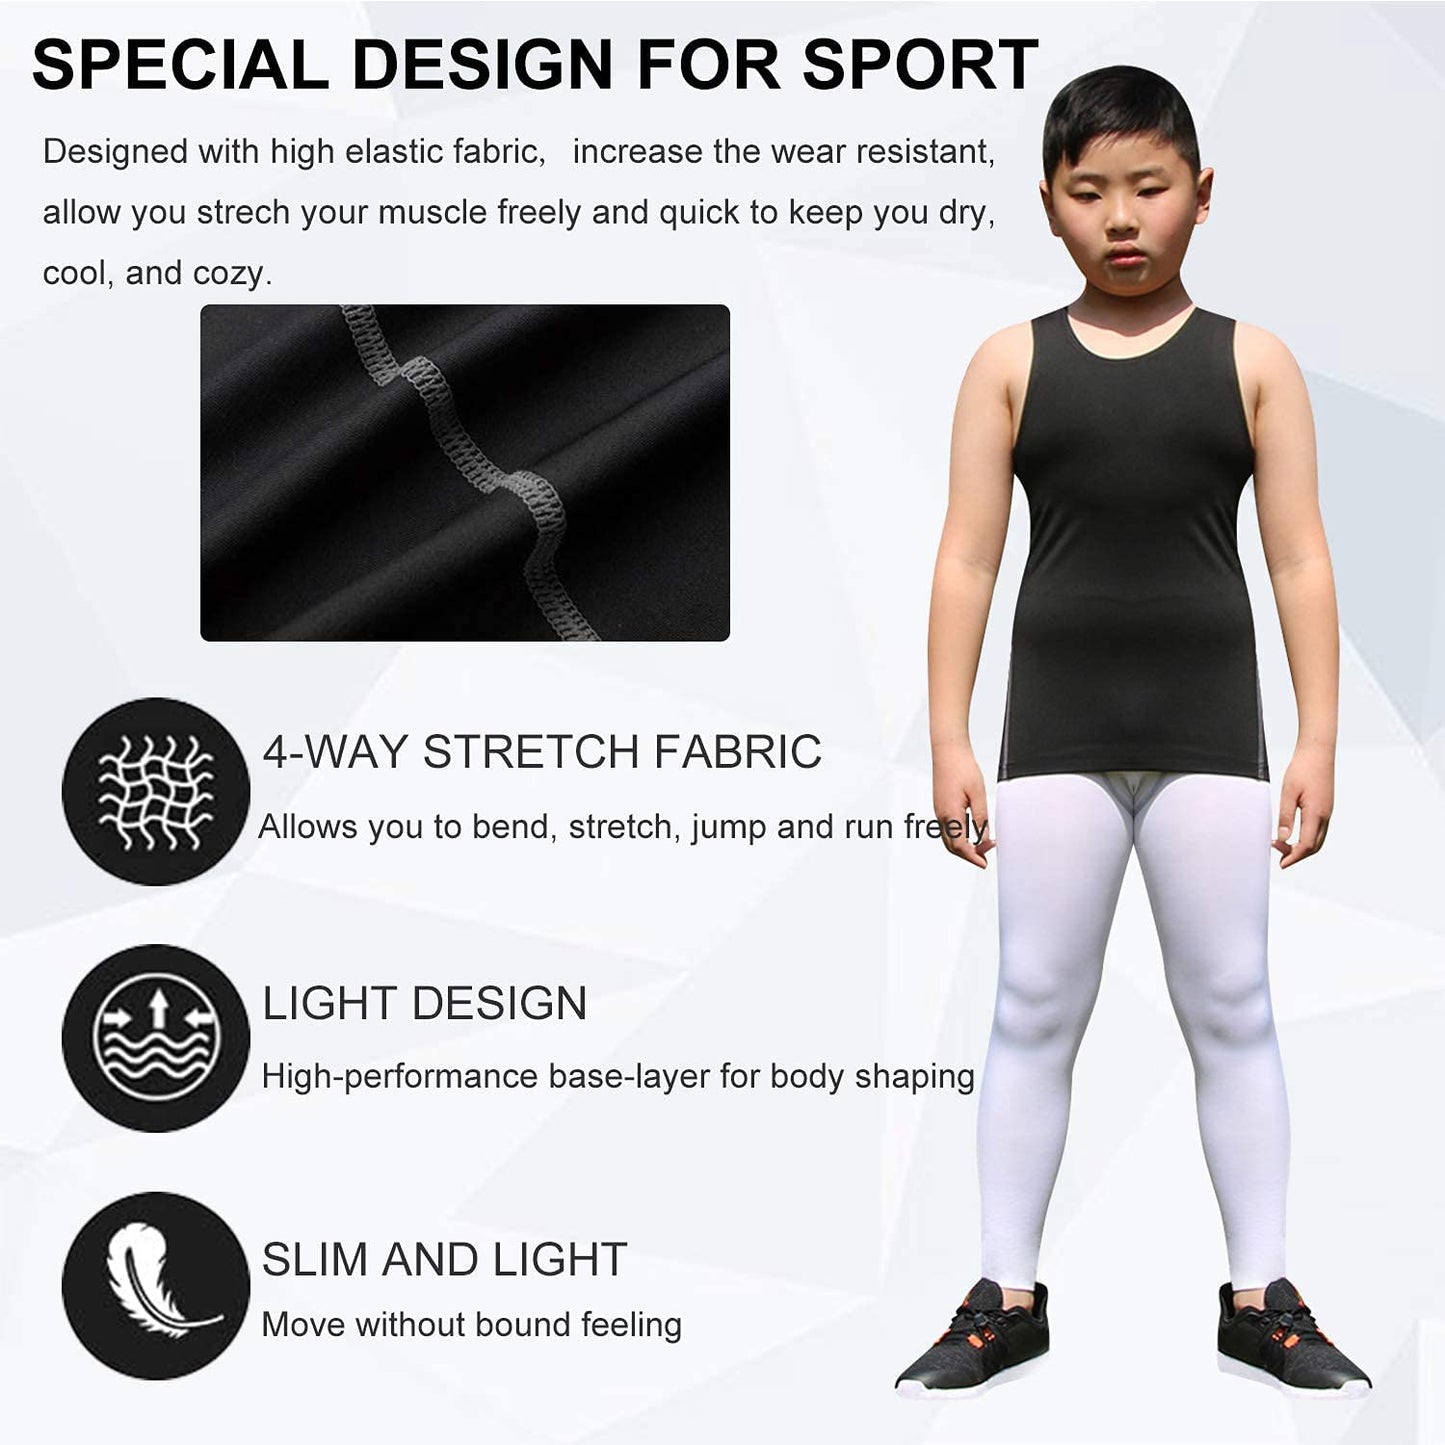 Youth Boys Girls Compression Tank Tops Athletic Sleeveless Shirt Undershirts for Unisex Workout Base Layer Vest LANBAOSI